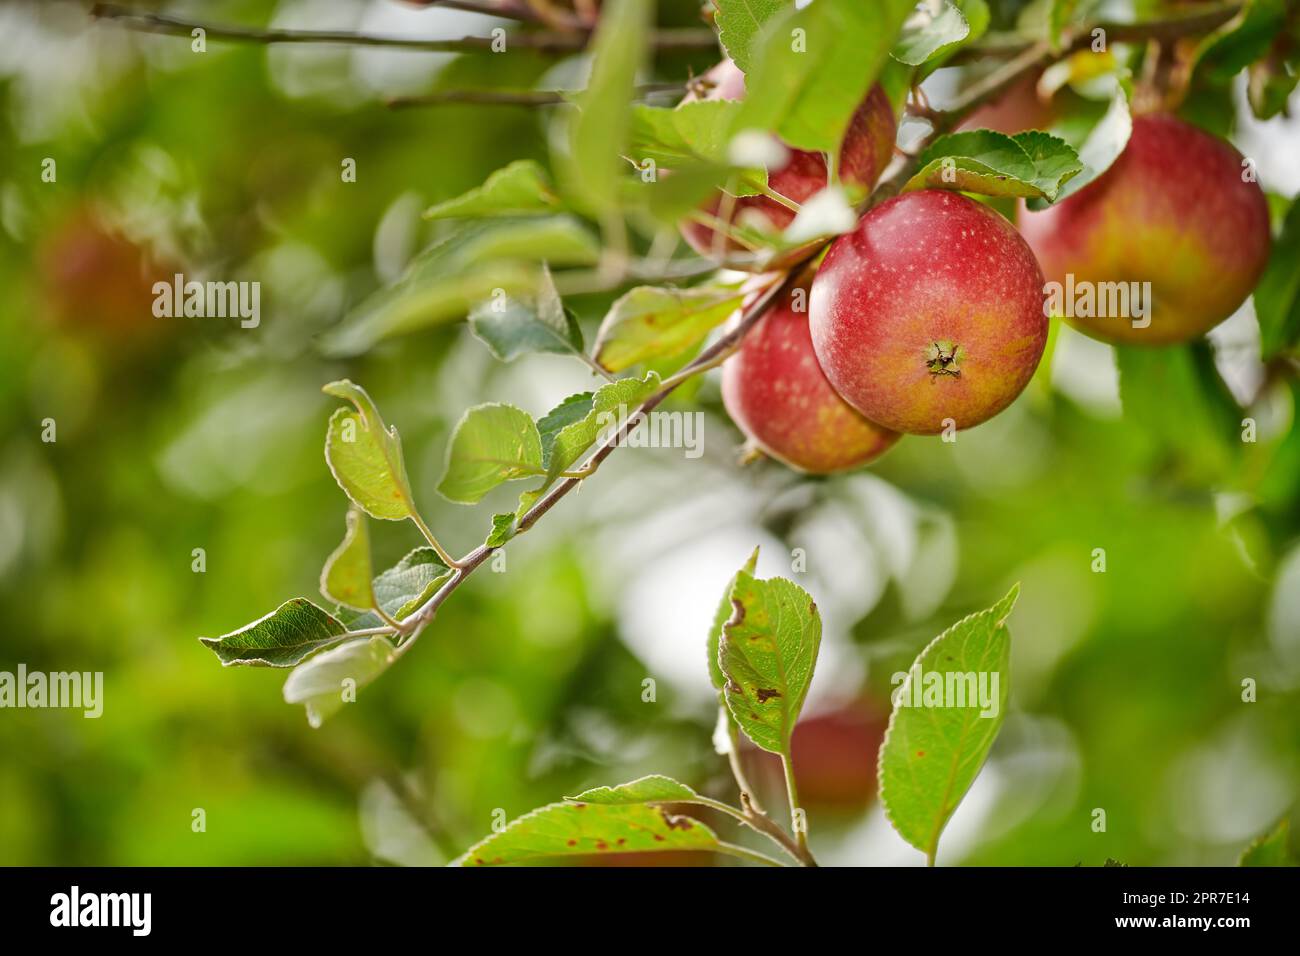 Raw Organic Honeycrisp Apples Stock Photo - Download Image Now